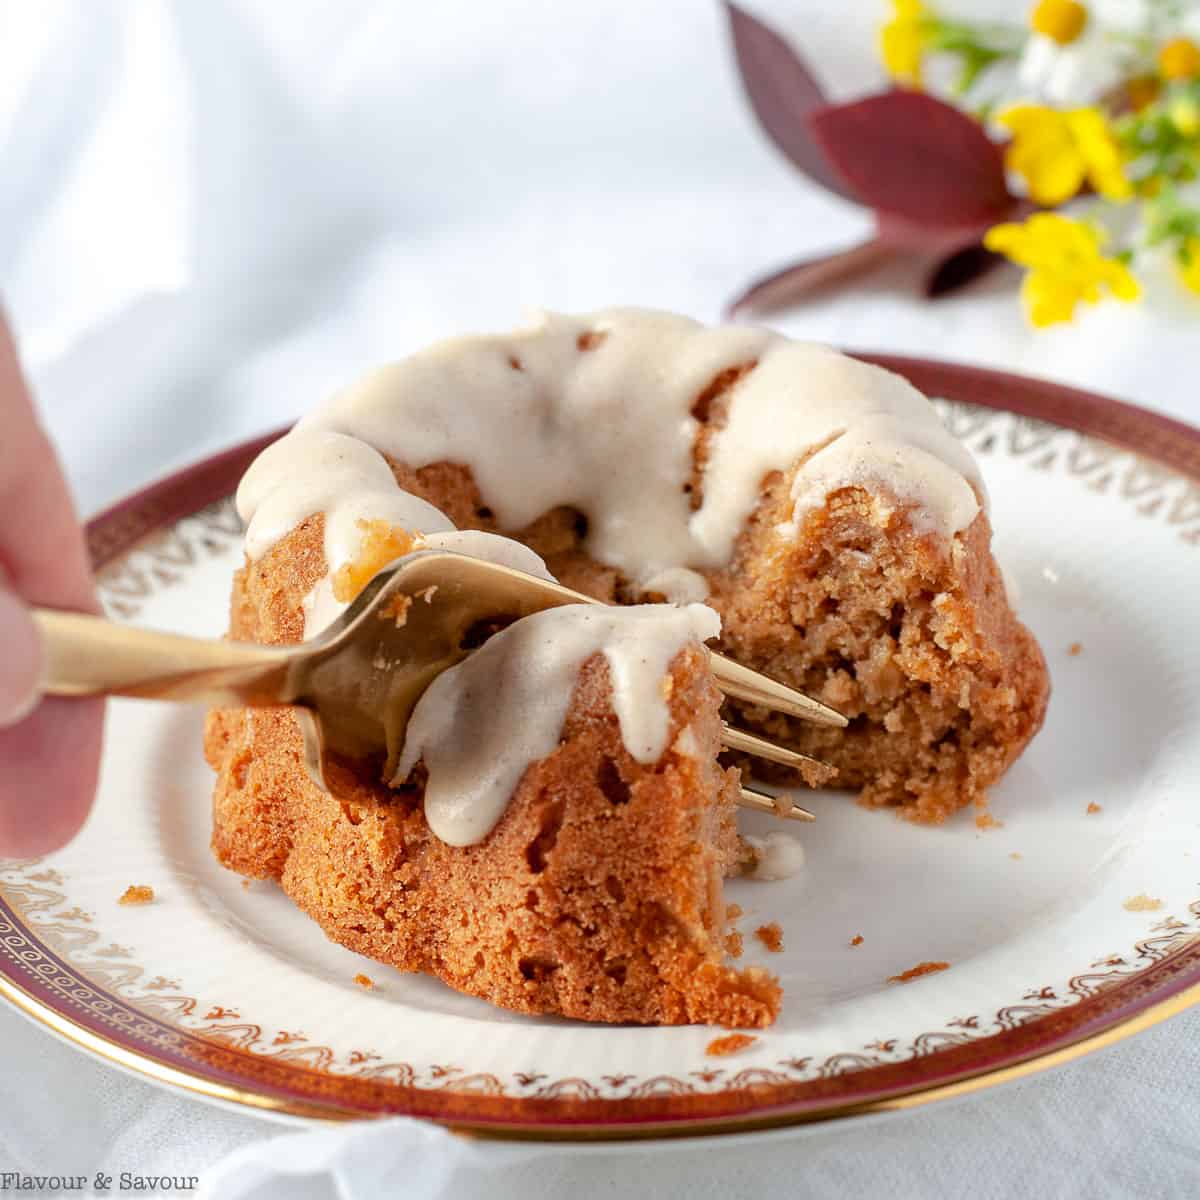 https://www.flavourandsavour.com/wp-content/uploads/2020/10/Mini-Apple-Bundt-Cake-with-a-fork-square.jpg